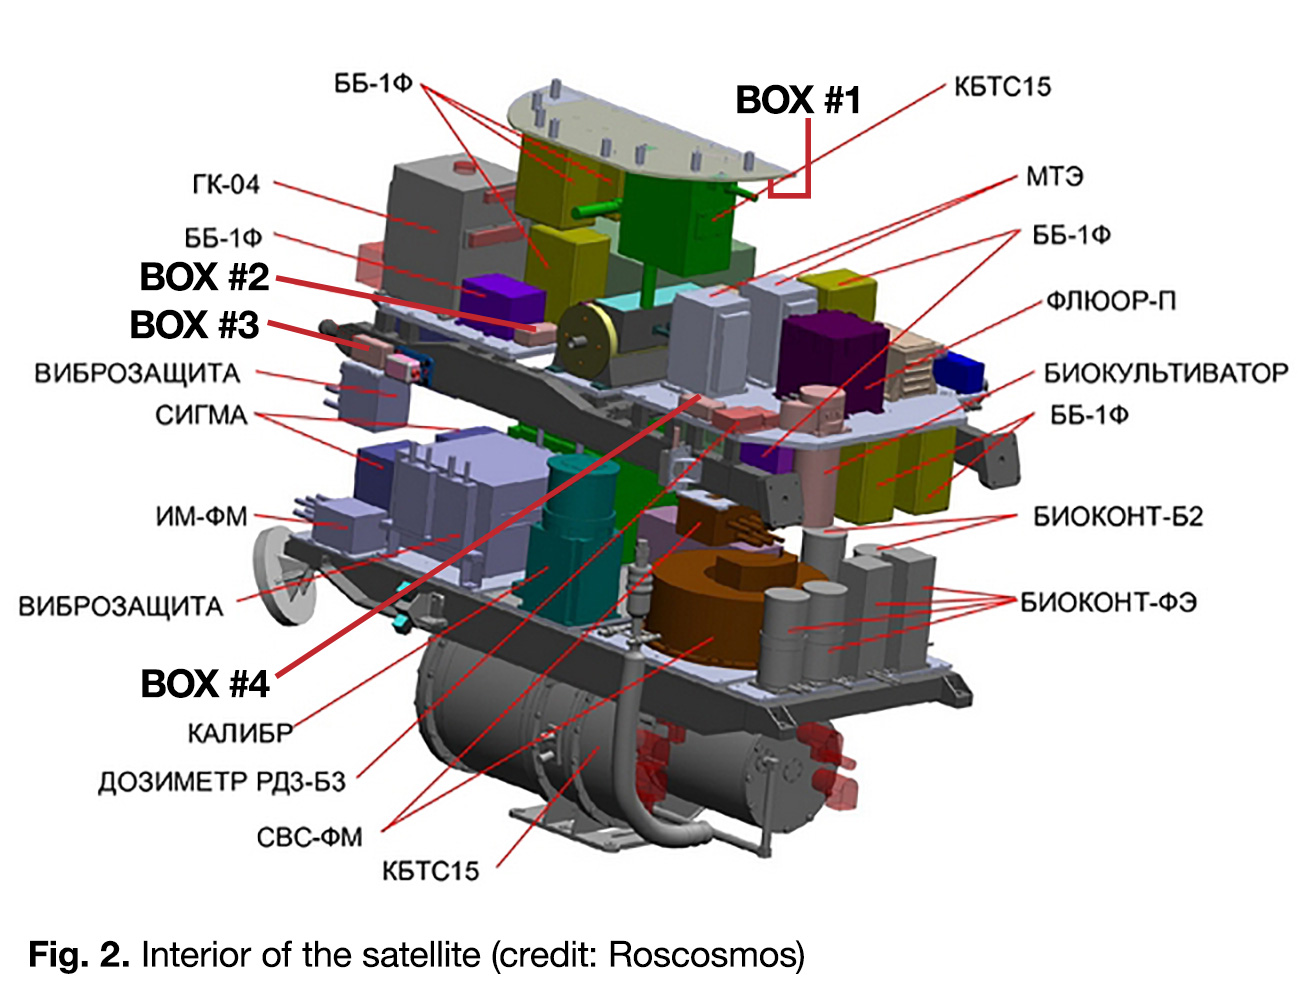 Fig. 2. Interior of the satellite (credit: Roscosmos)